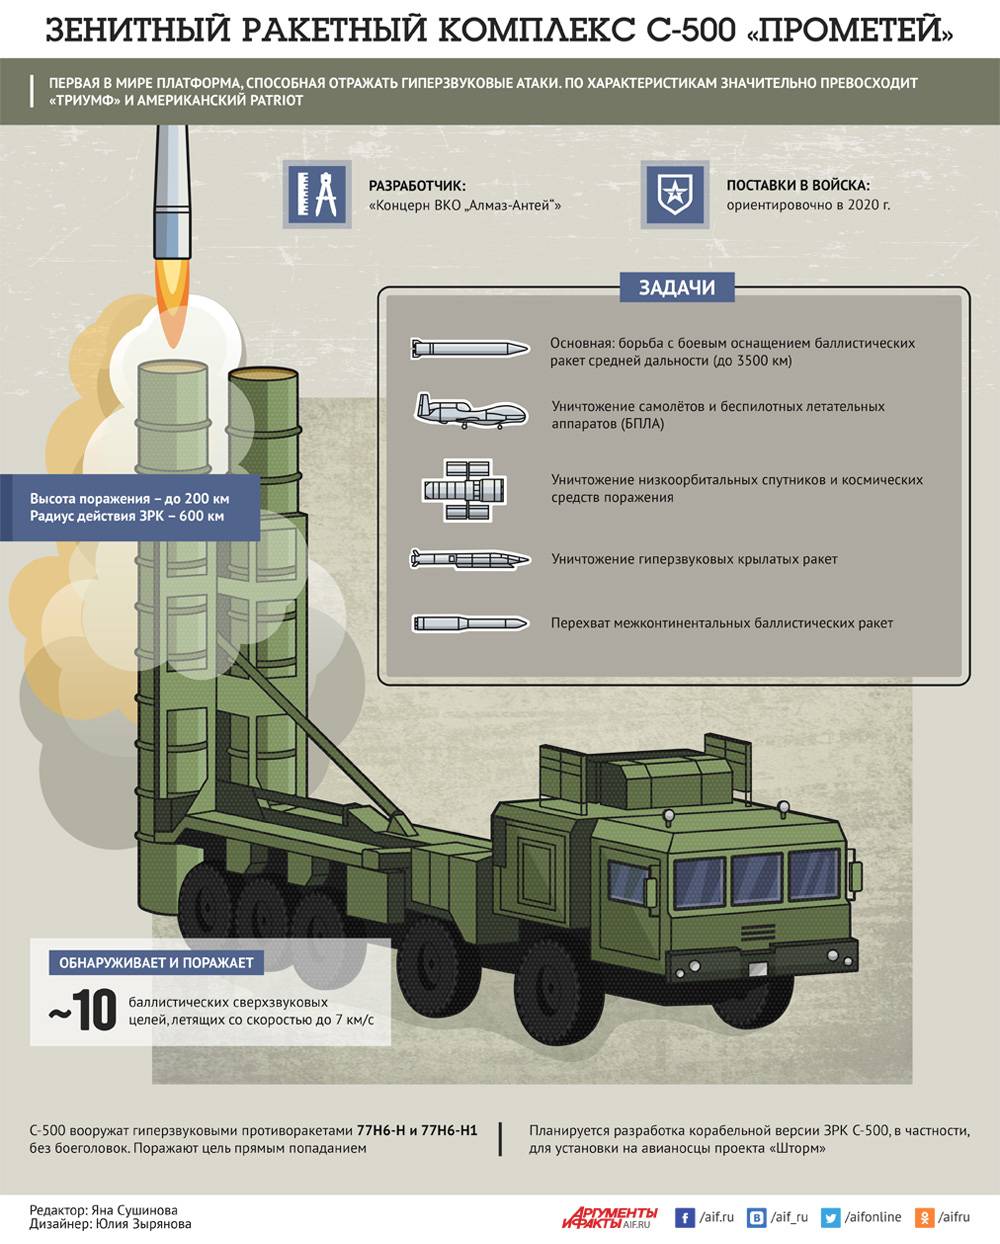 С-500 (зенитно-ракетная система): характеристики